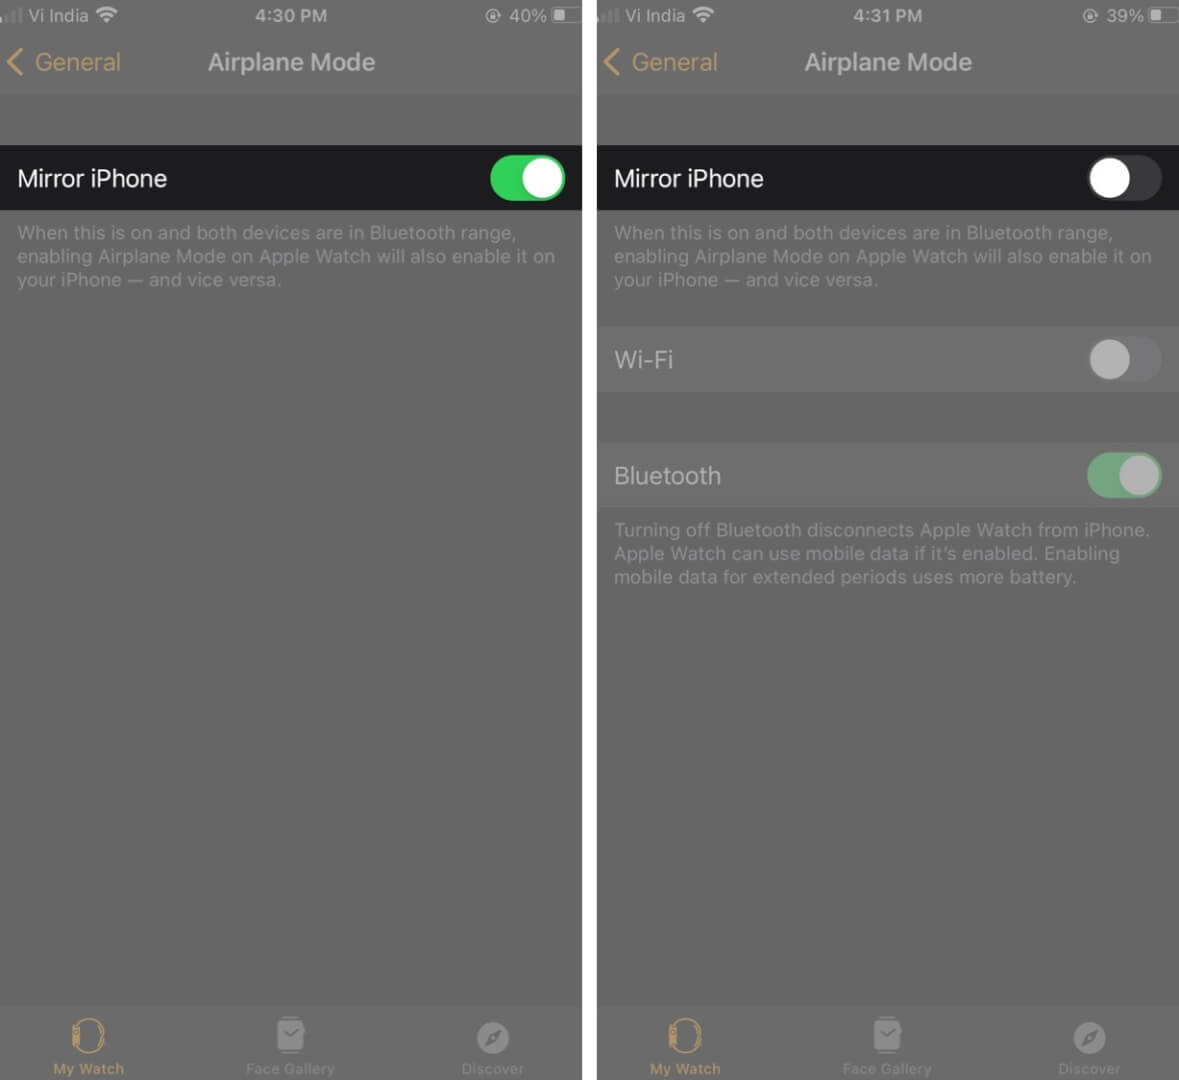 Turn Off Mirror iPhone in Watch App